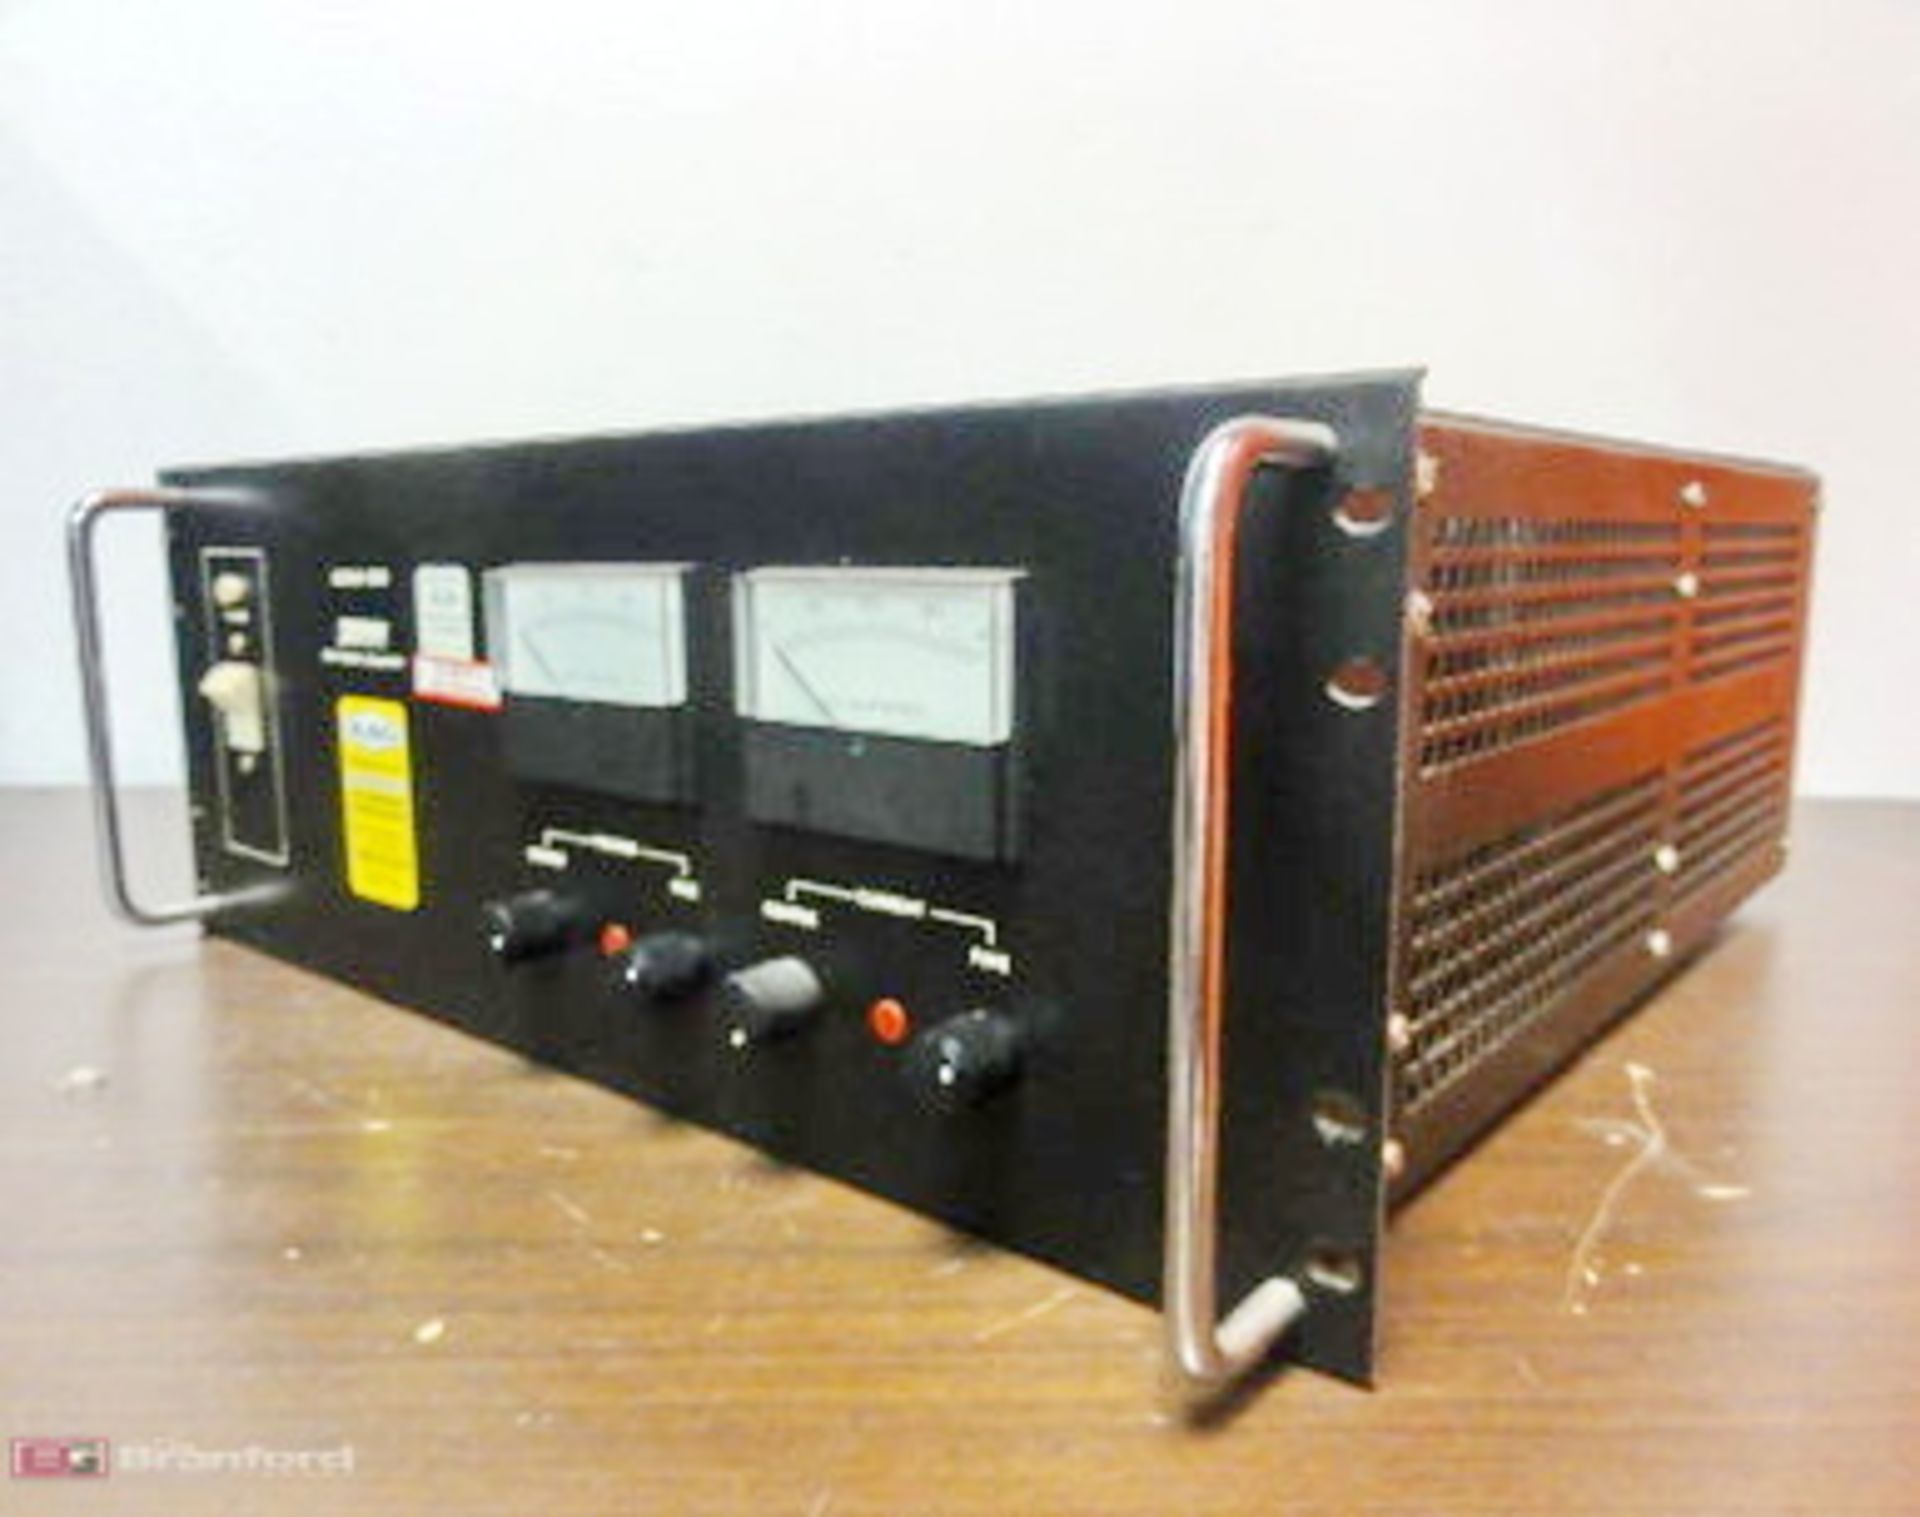 Sorensen DCR 60-30B dc power supply